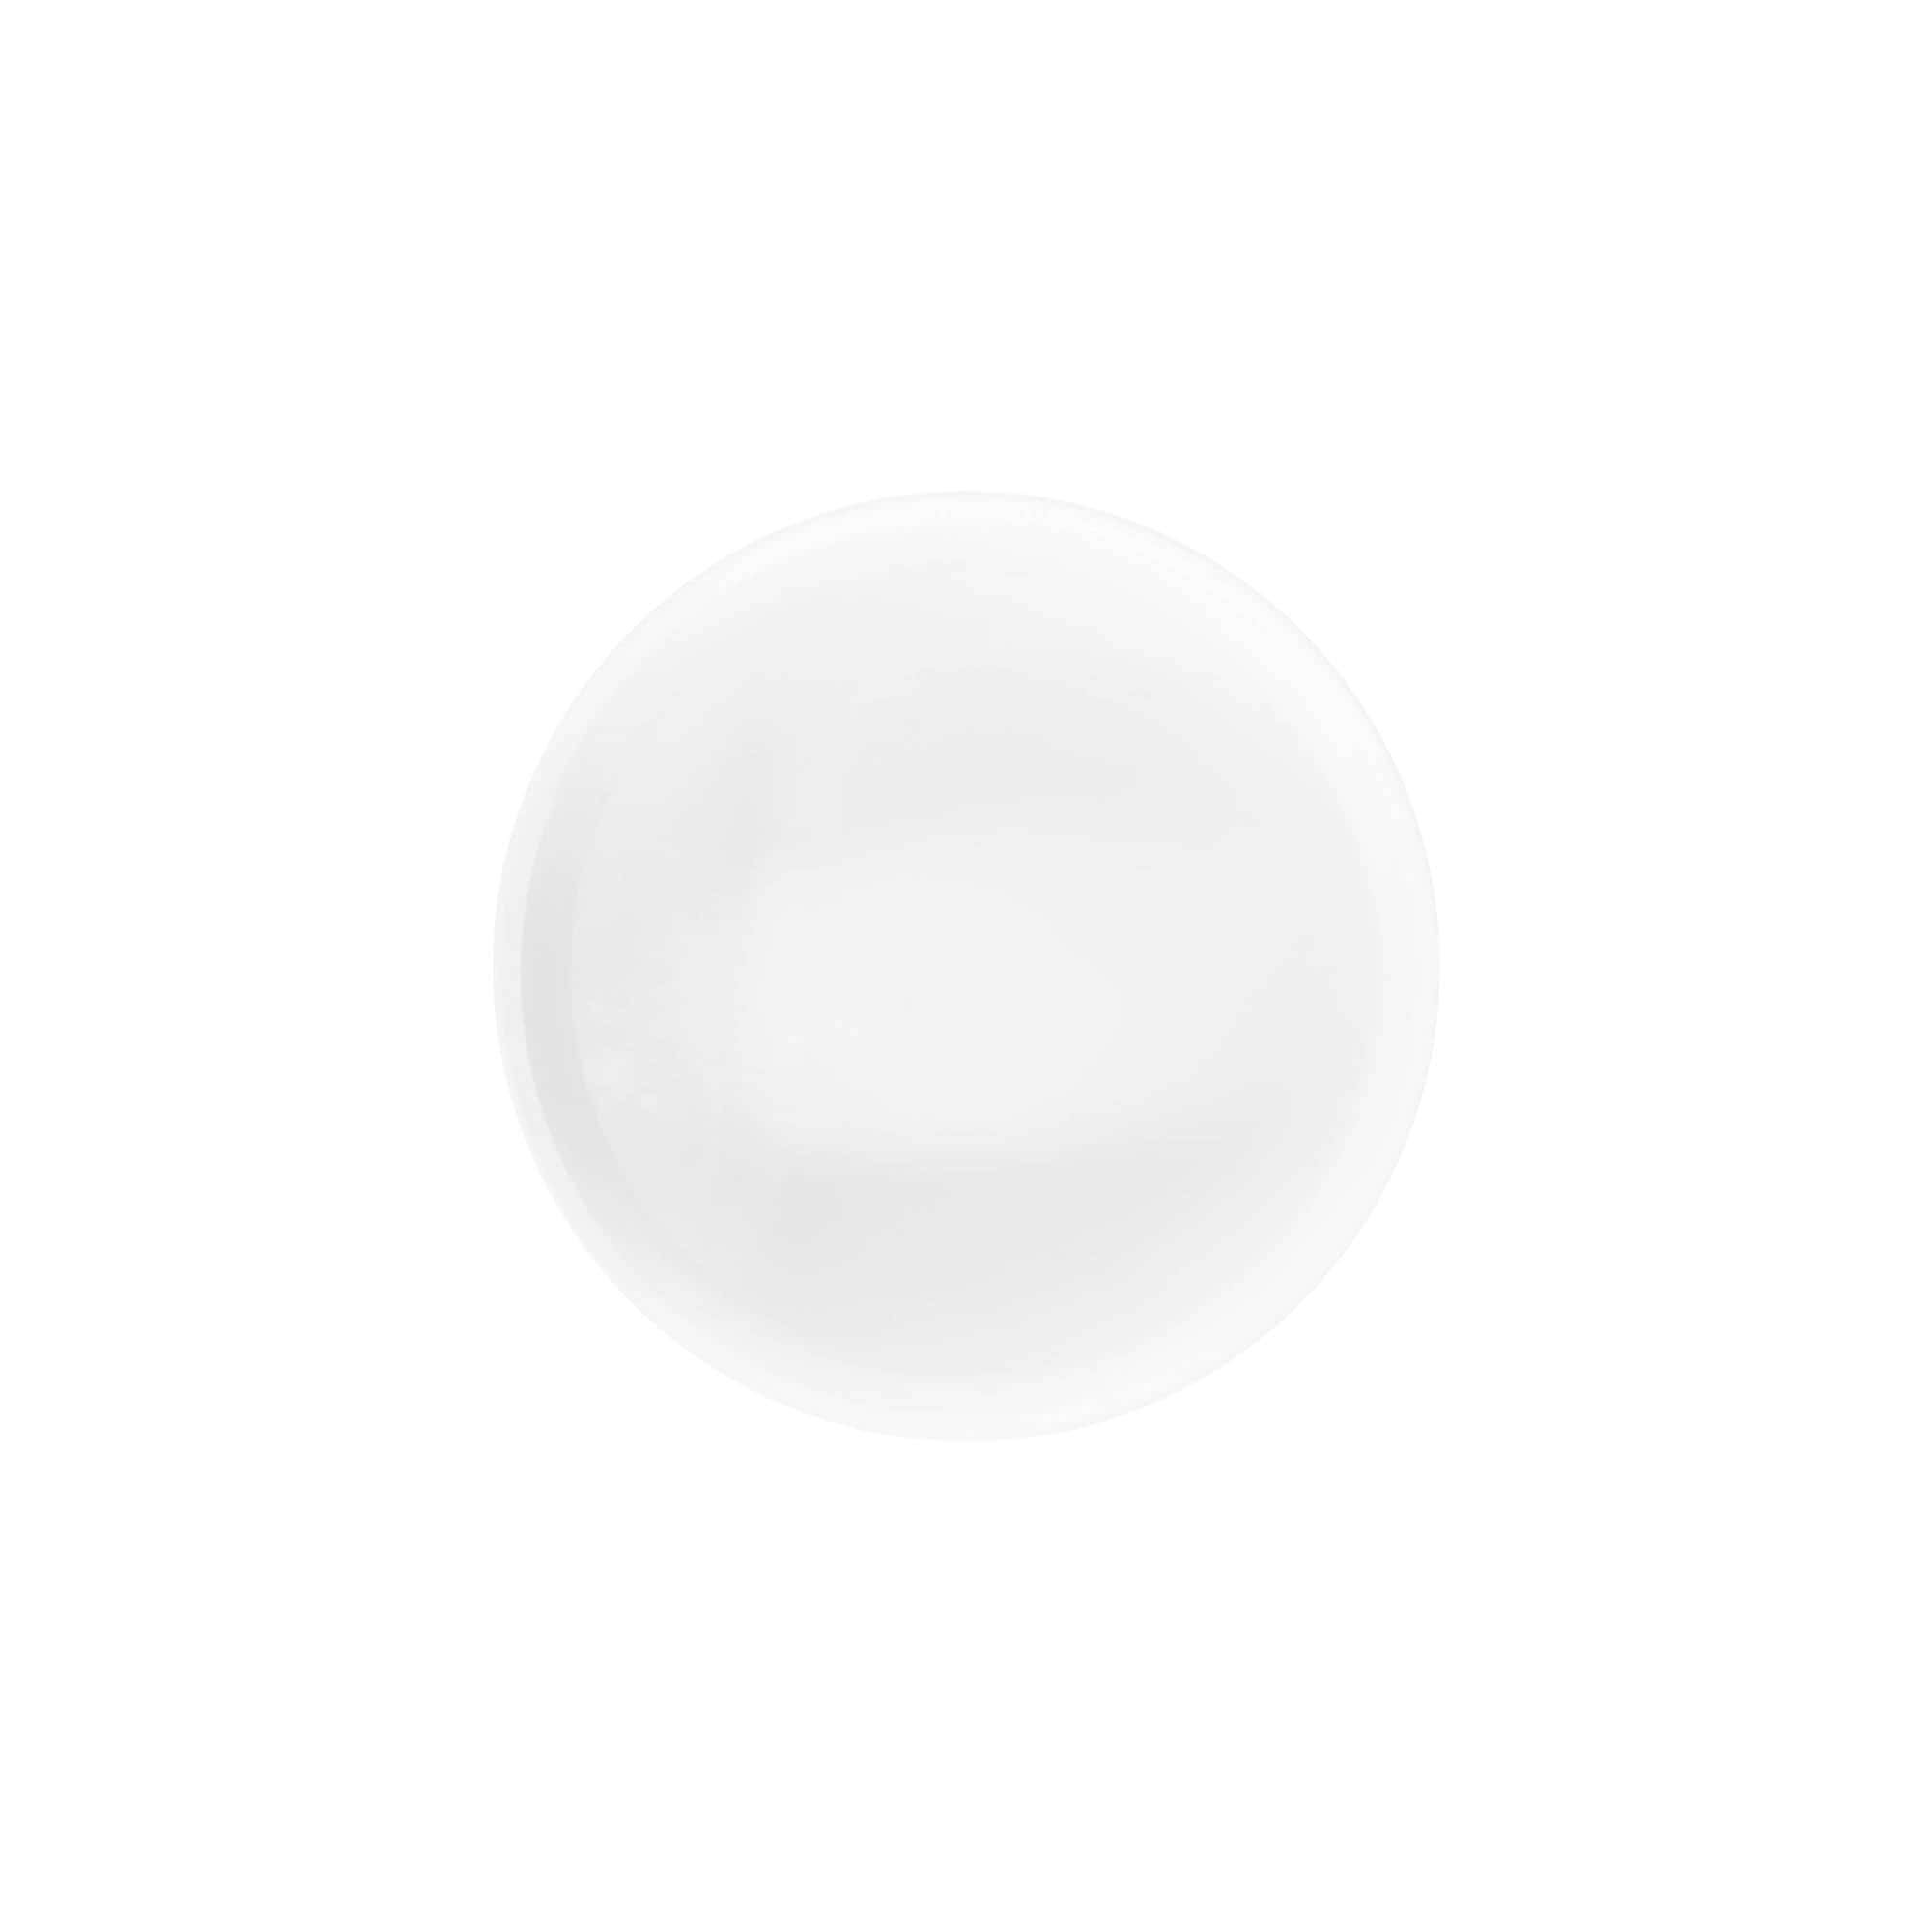 Tapón de rosca 'White Line' de 125 ml, plástico de PP, blanco